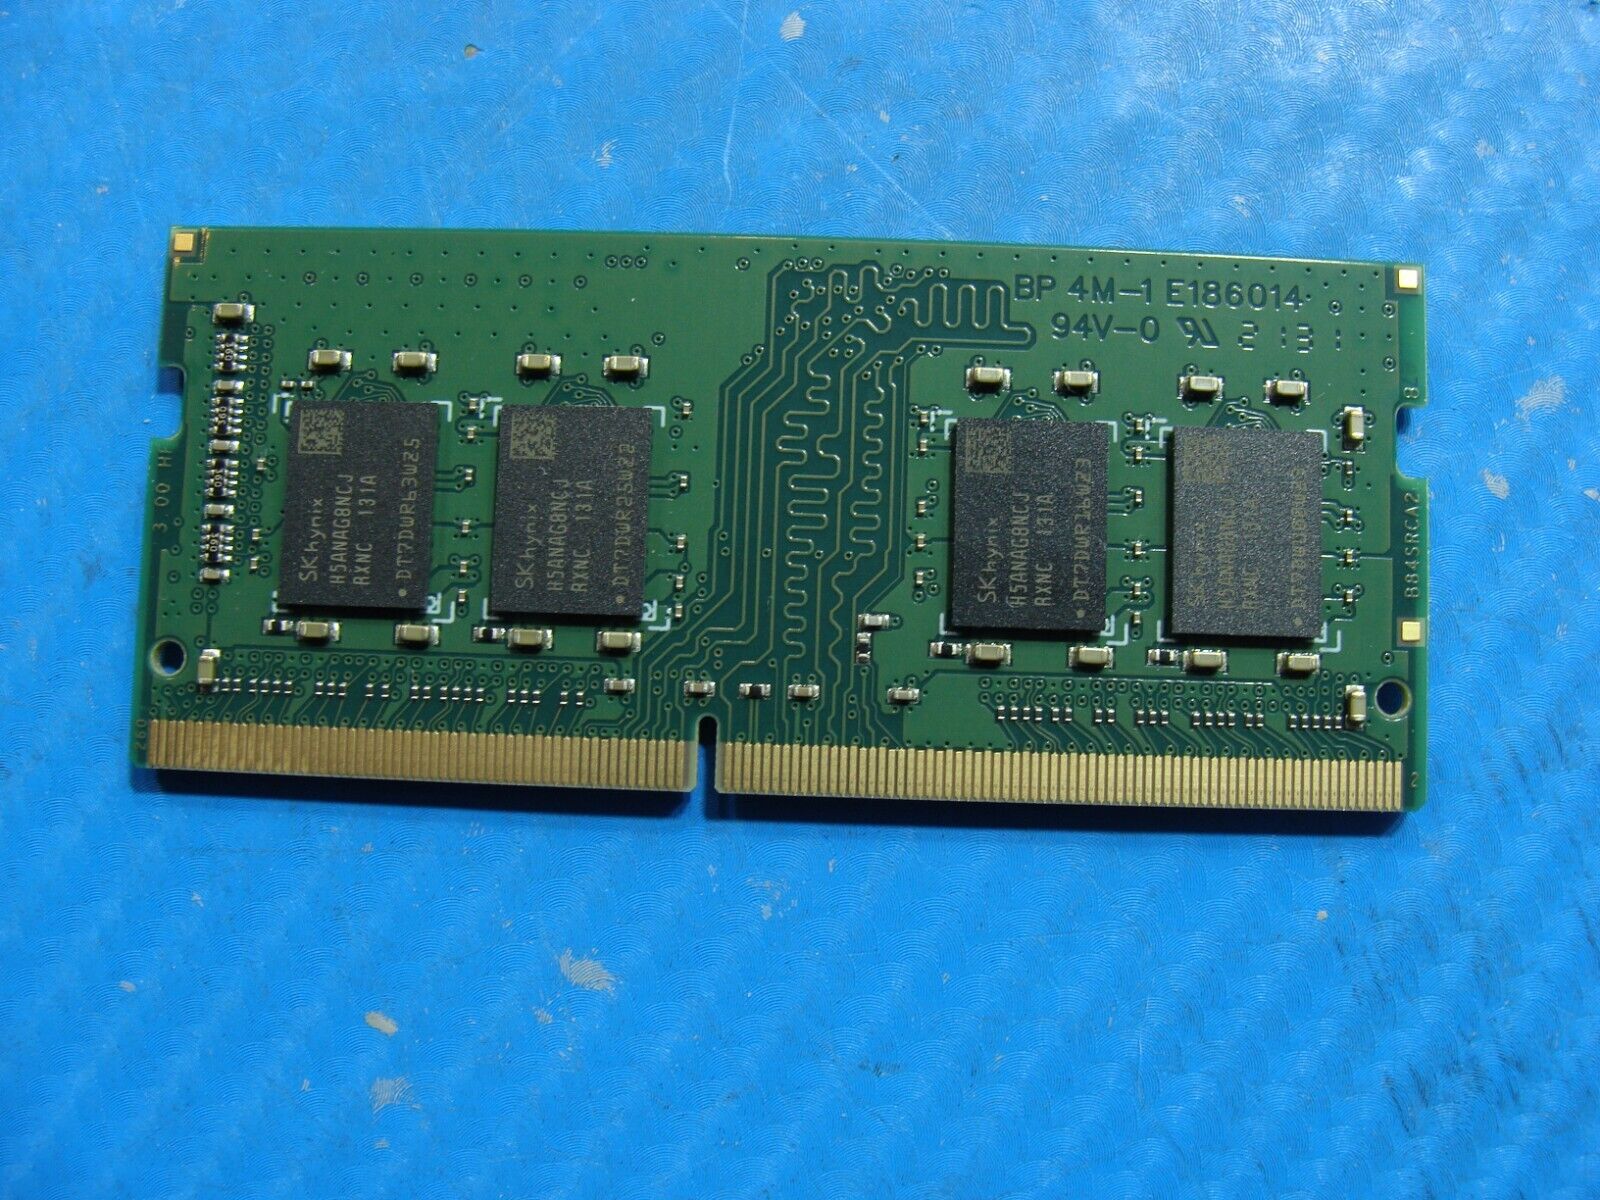 Dell 5560 ADATA 16GB 1Rx8 PC4-3200AA Memory RAM SO-DIMM AO1P32NCSV1-BEWS